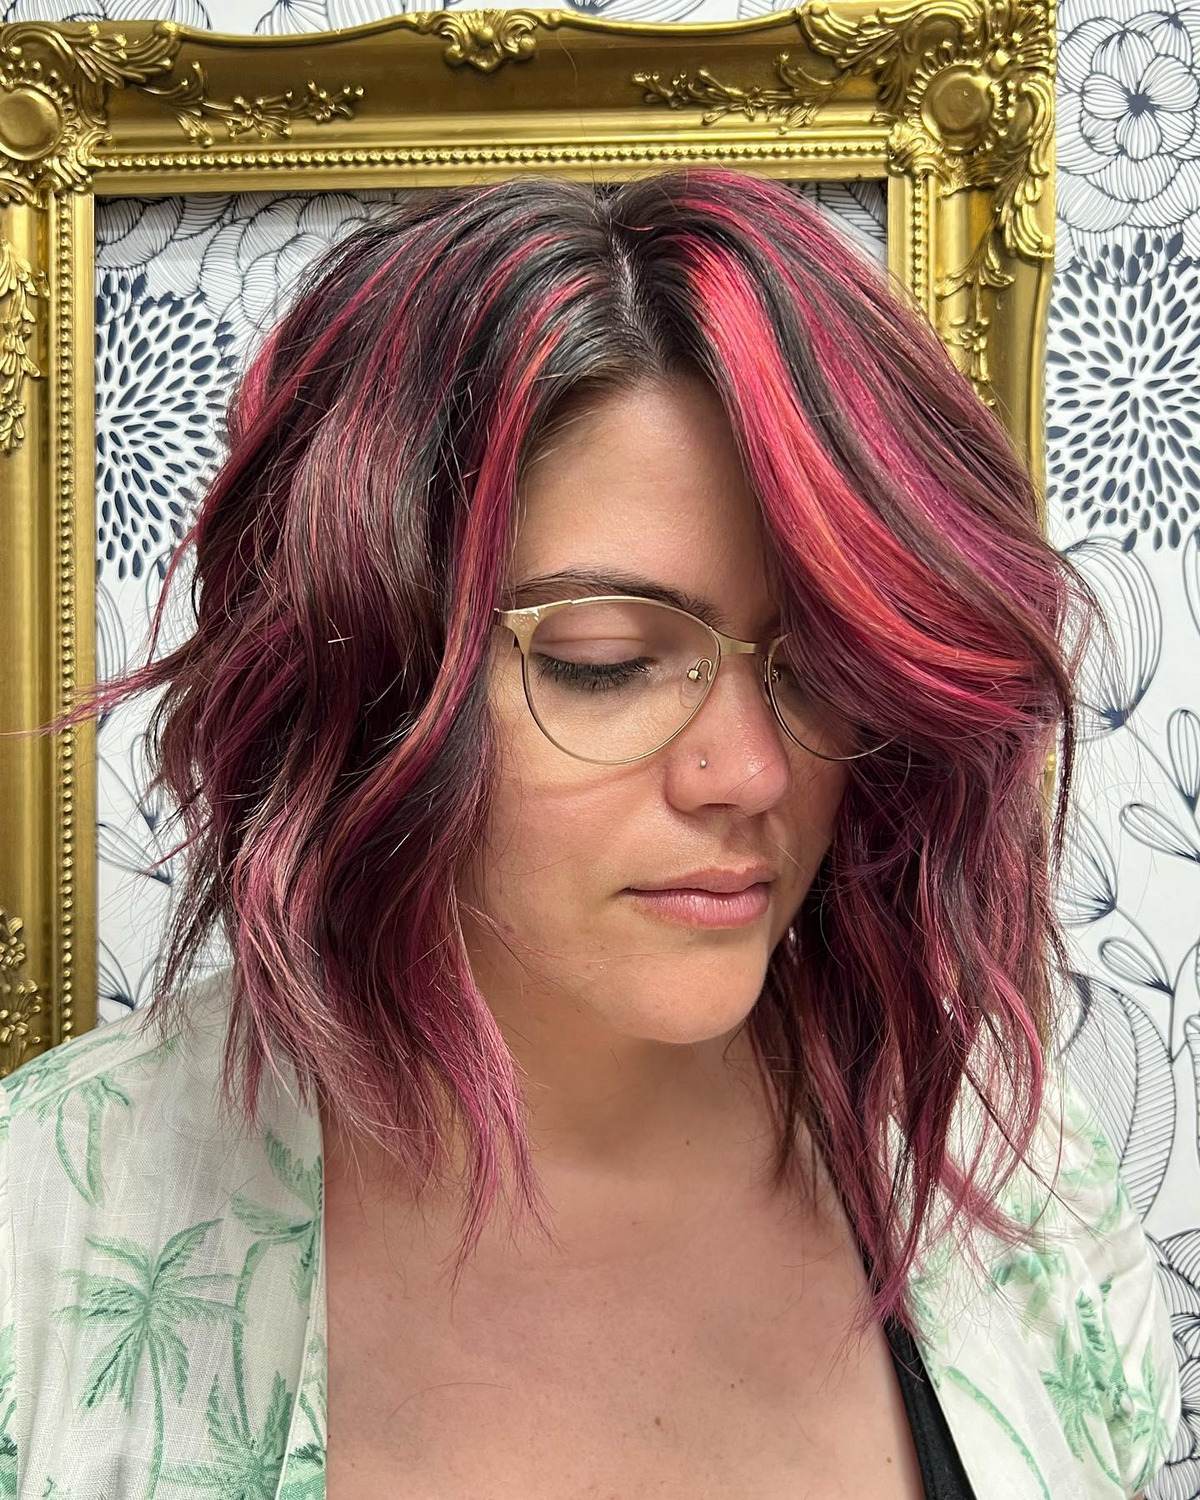 Asymmetric Pixie Cut With Short Messy Hair Pink Highlight